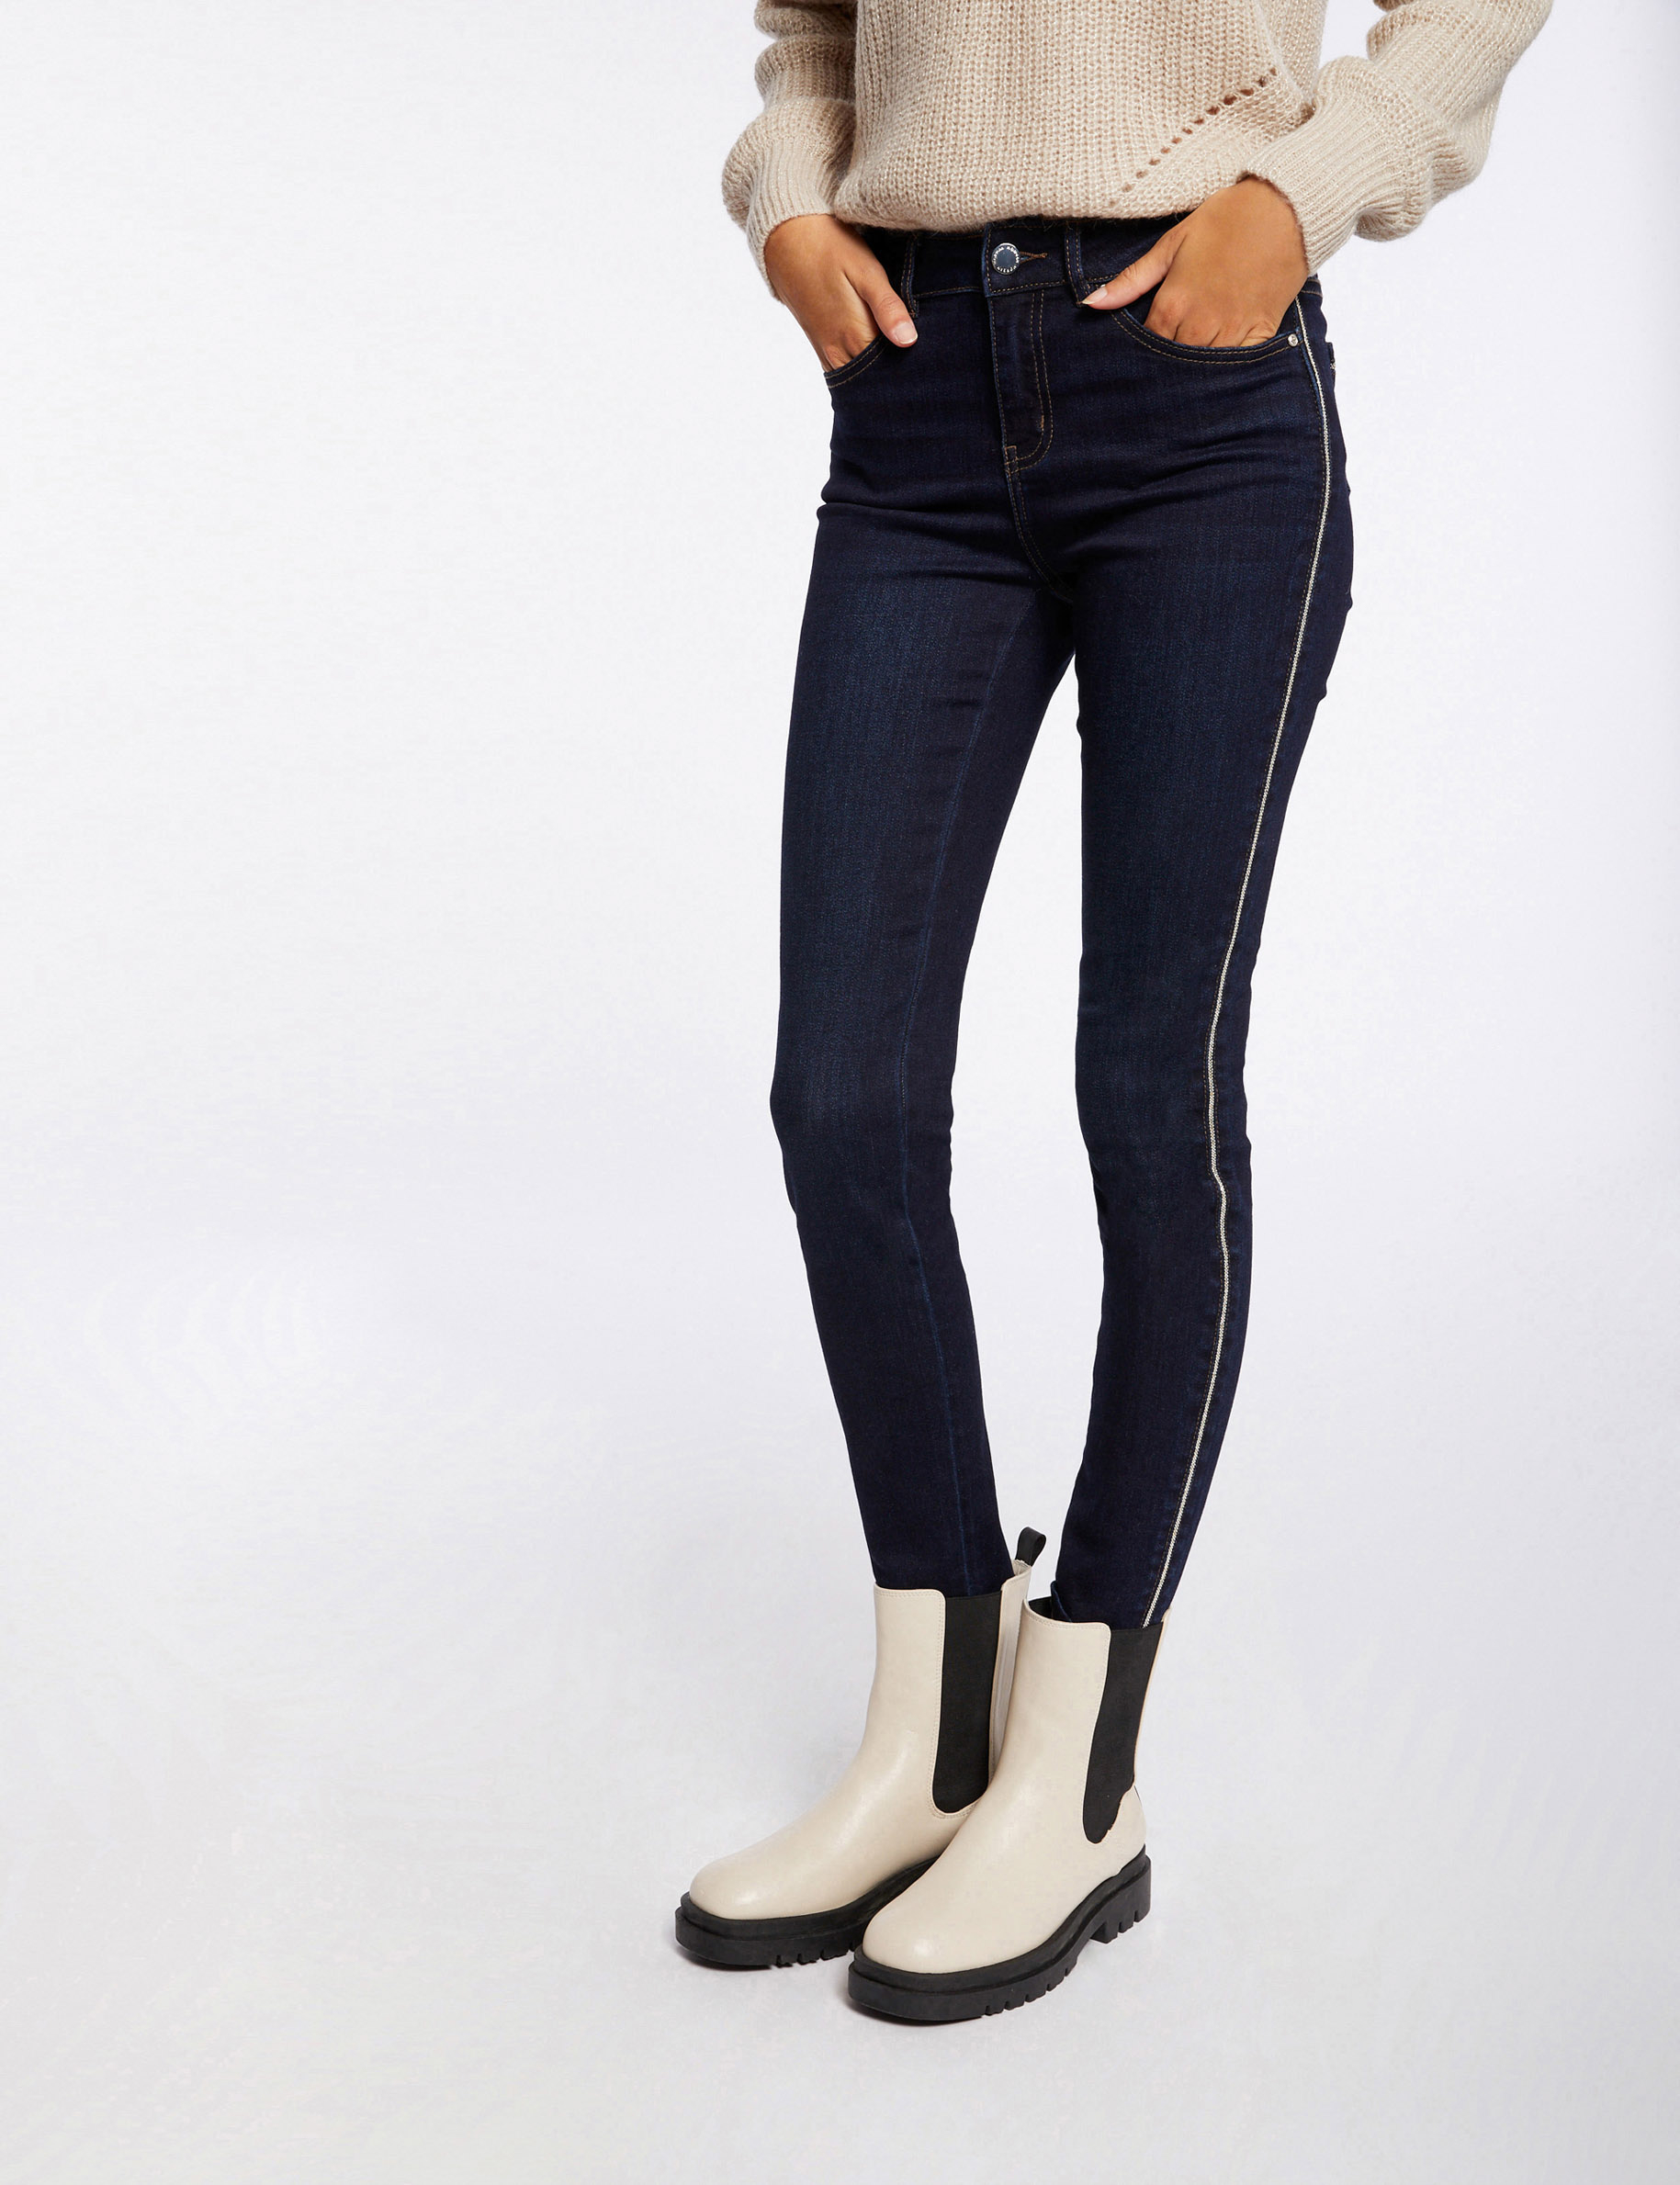 Slim jeans with rhinestones strips raw denim ladies'